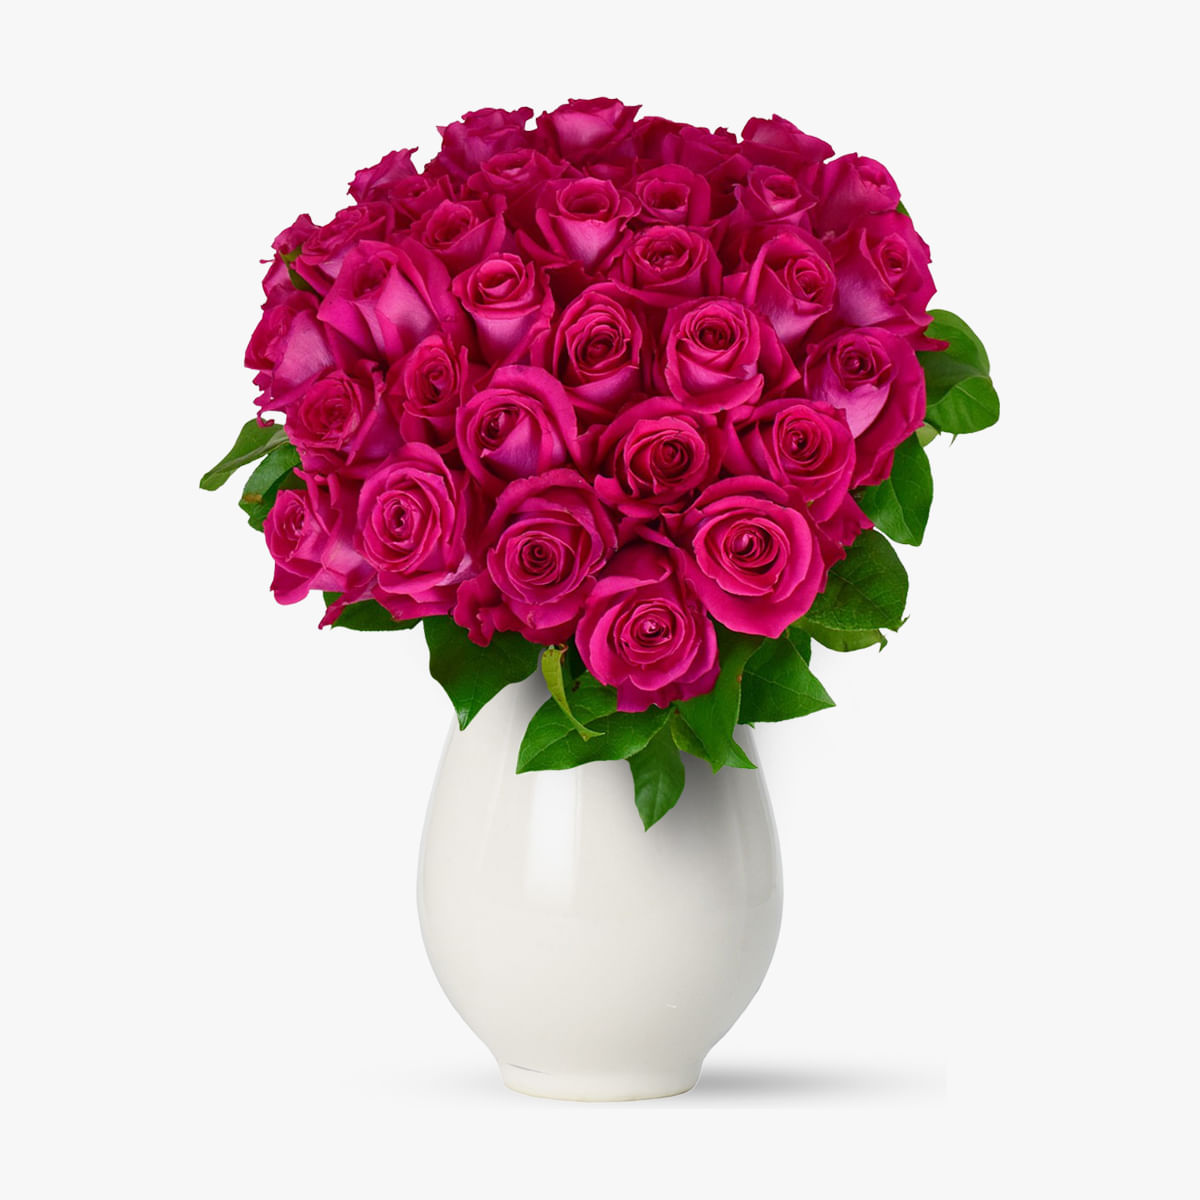 Buchet de 45 trandafiri roz – Standard Buchet imagine 2022